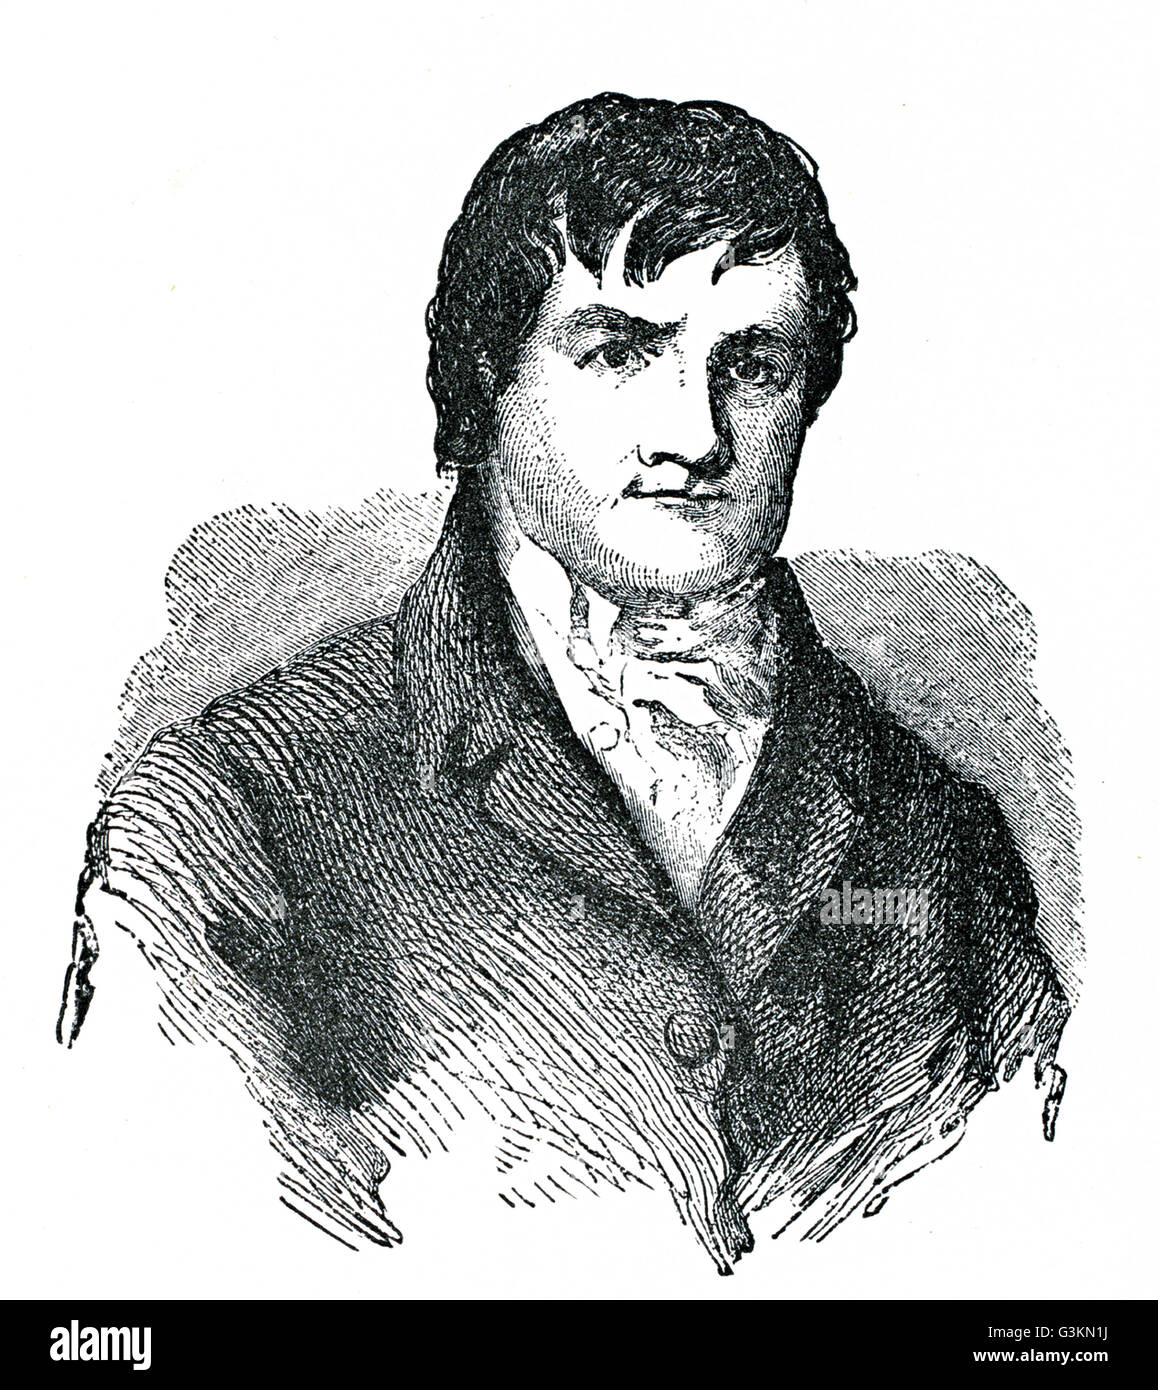 John Astor, 1763 - 1848 Stock Photo